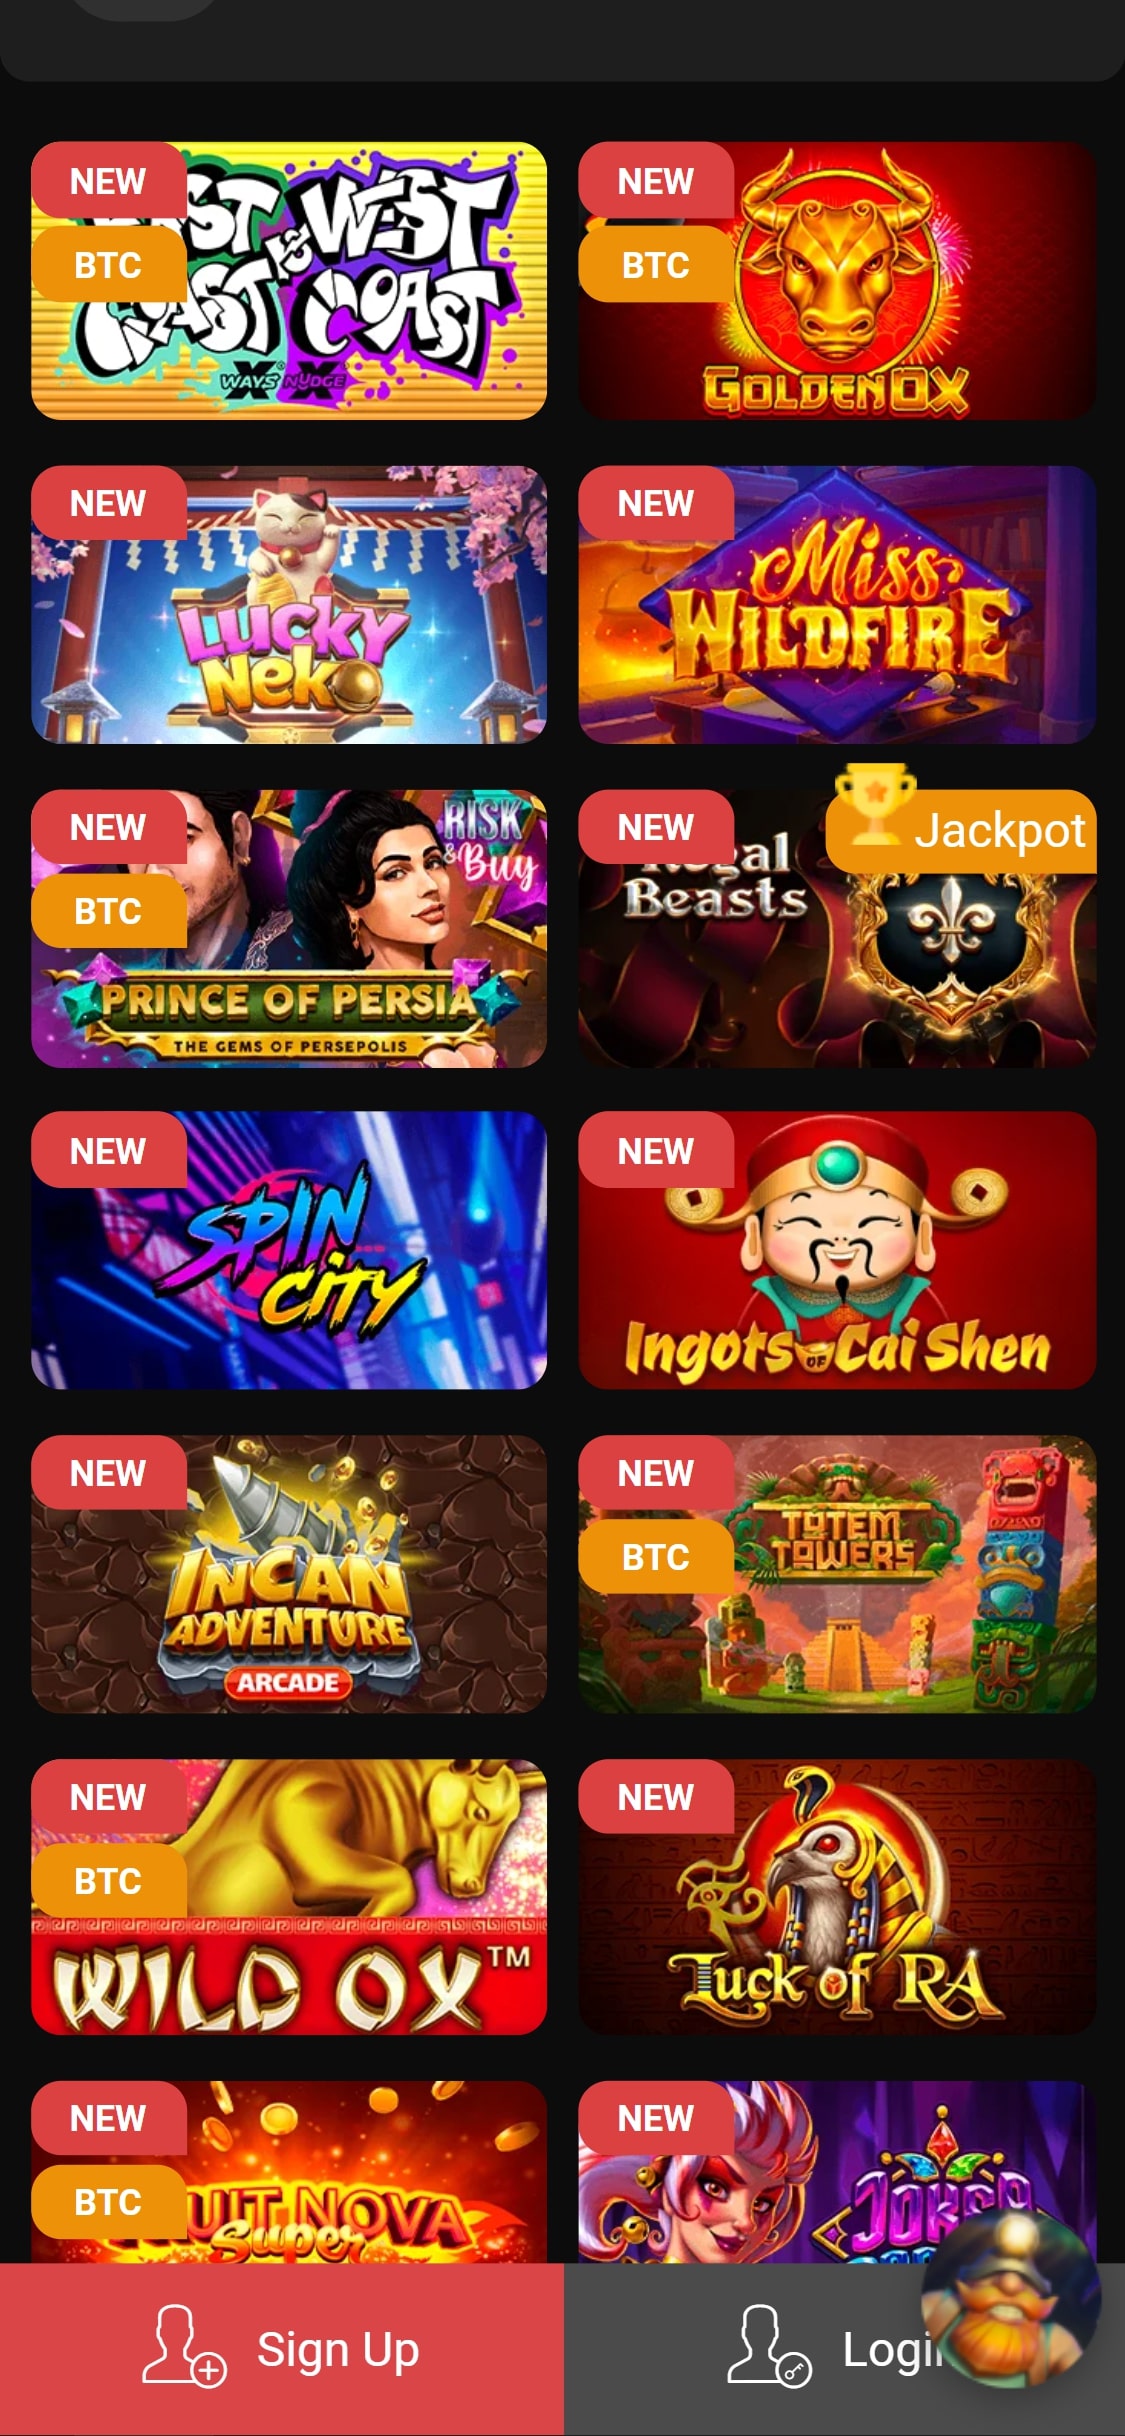 Casinochan Mobile Games Review